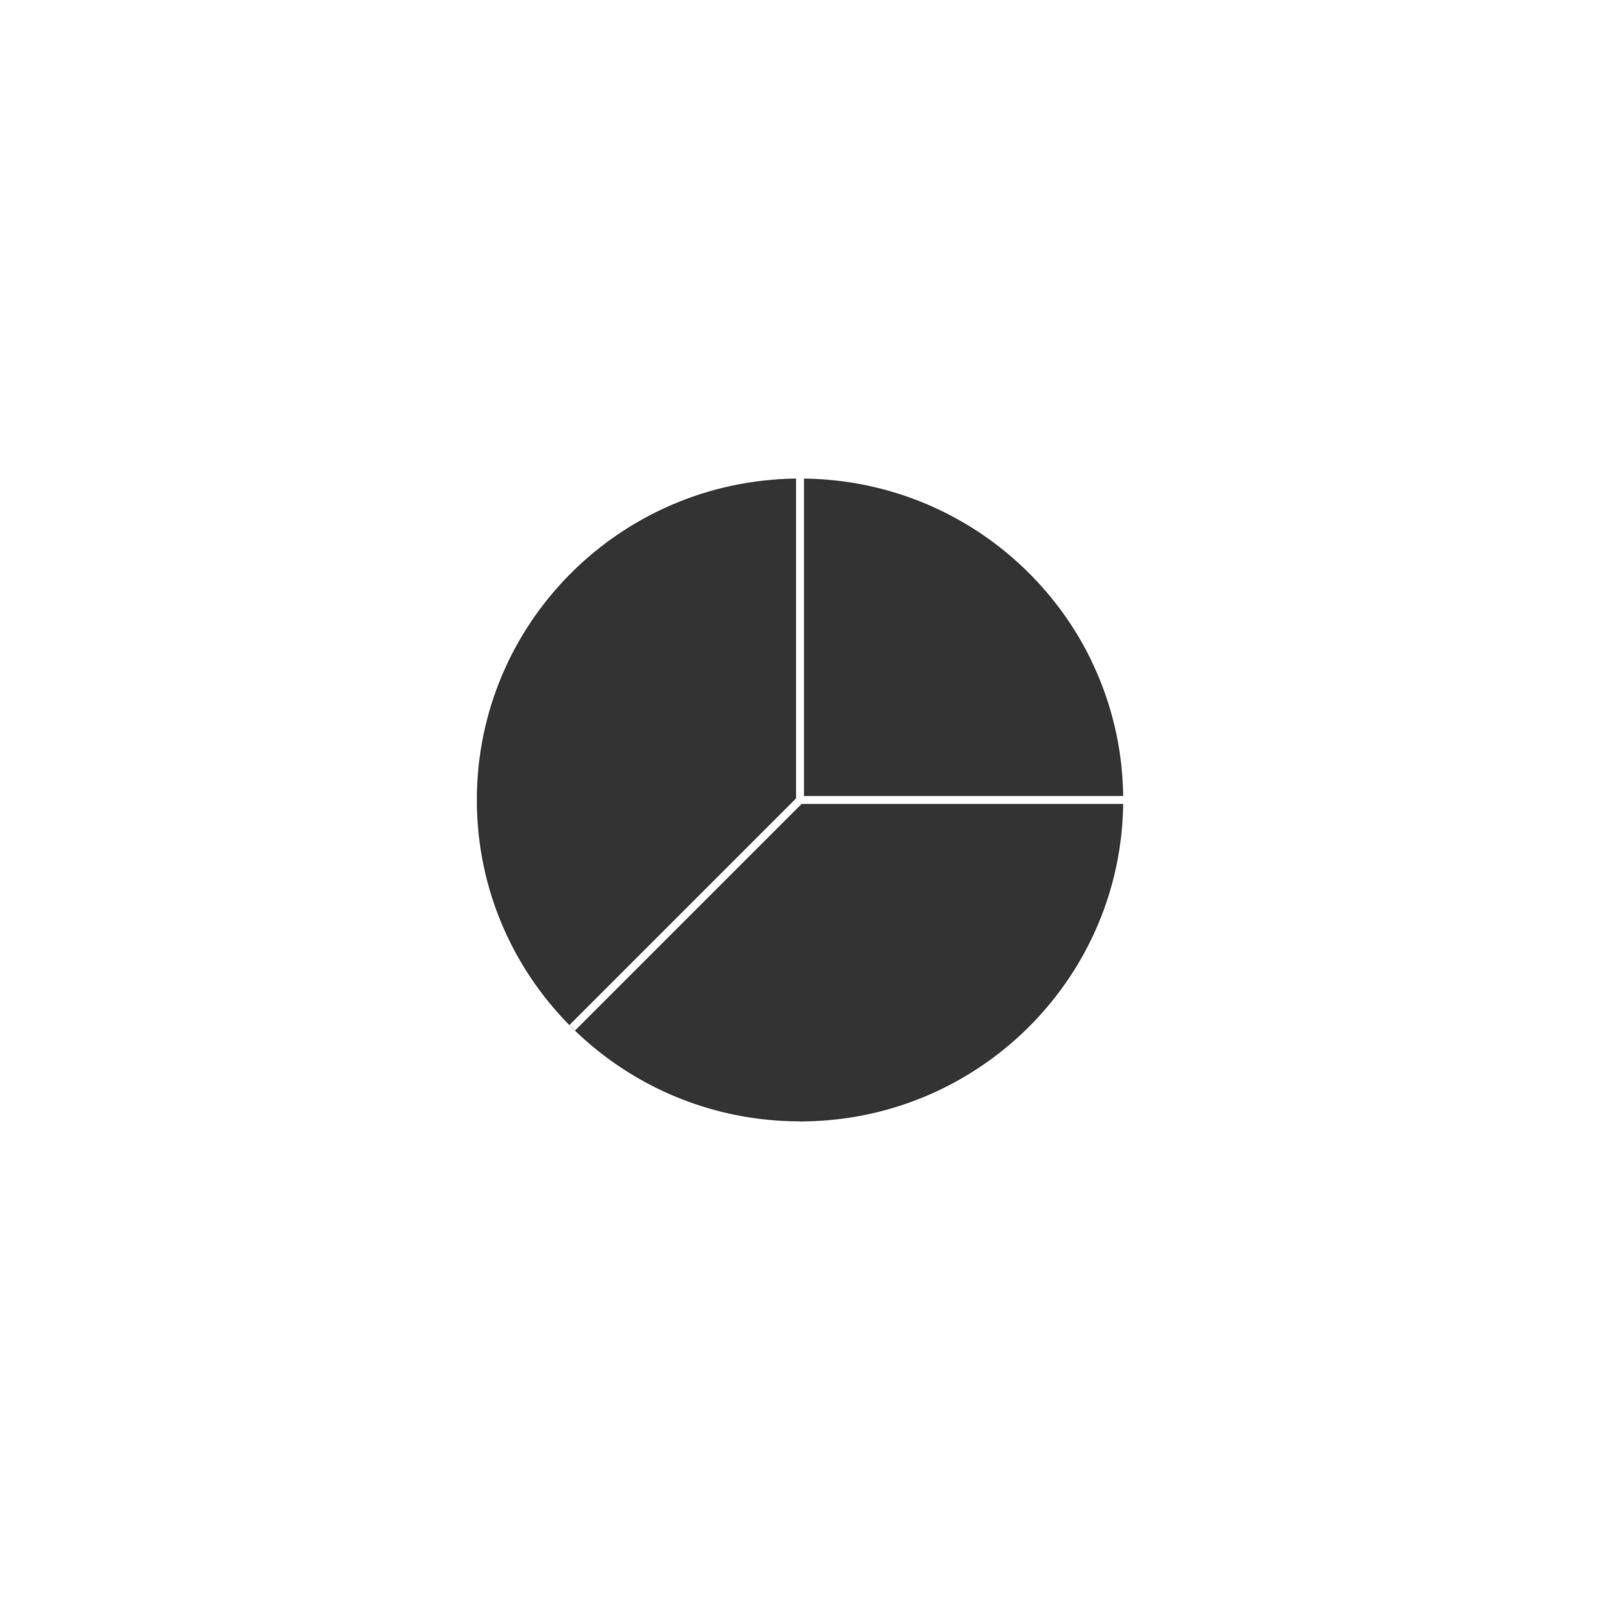 Circular chart, diagram, pie chart, pie graph statistics icon